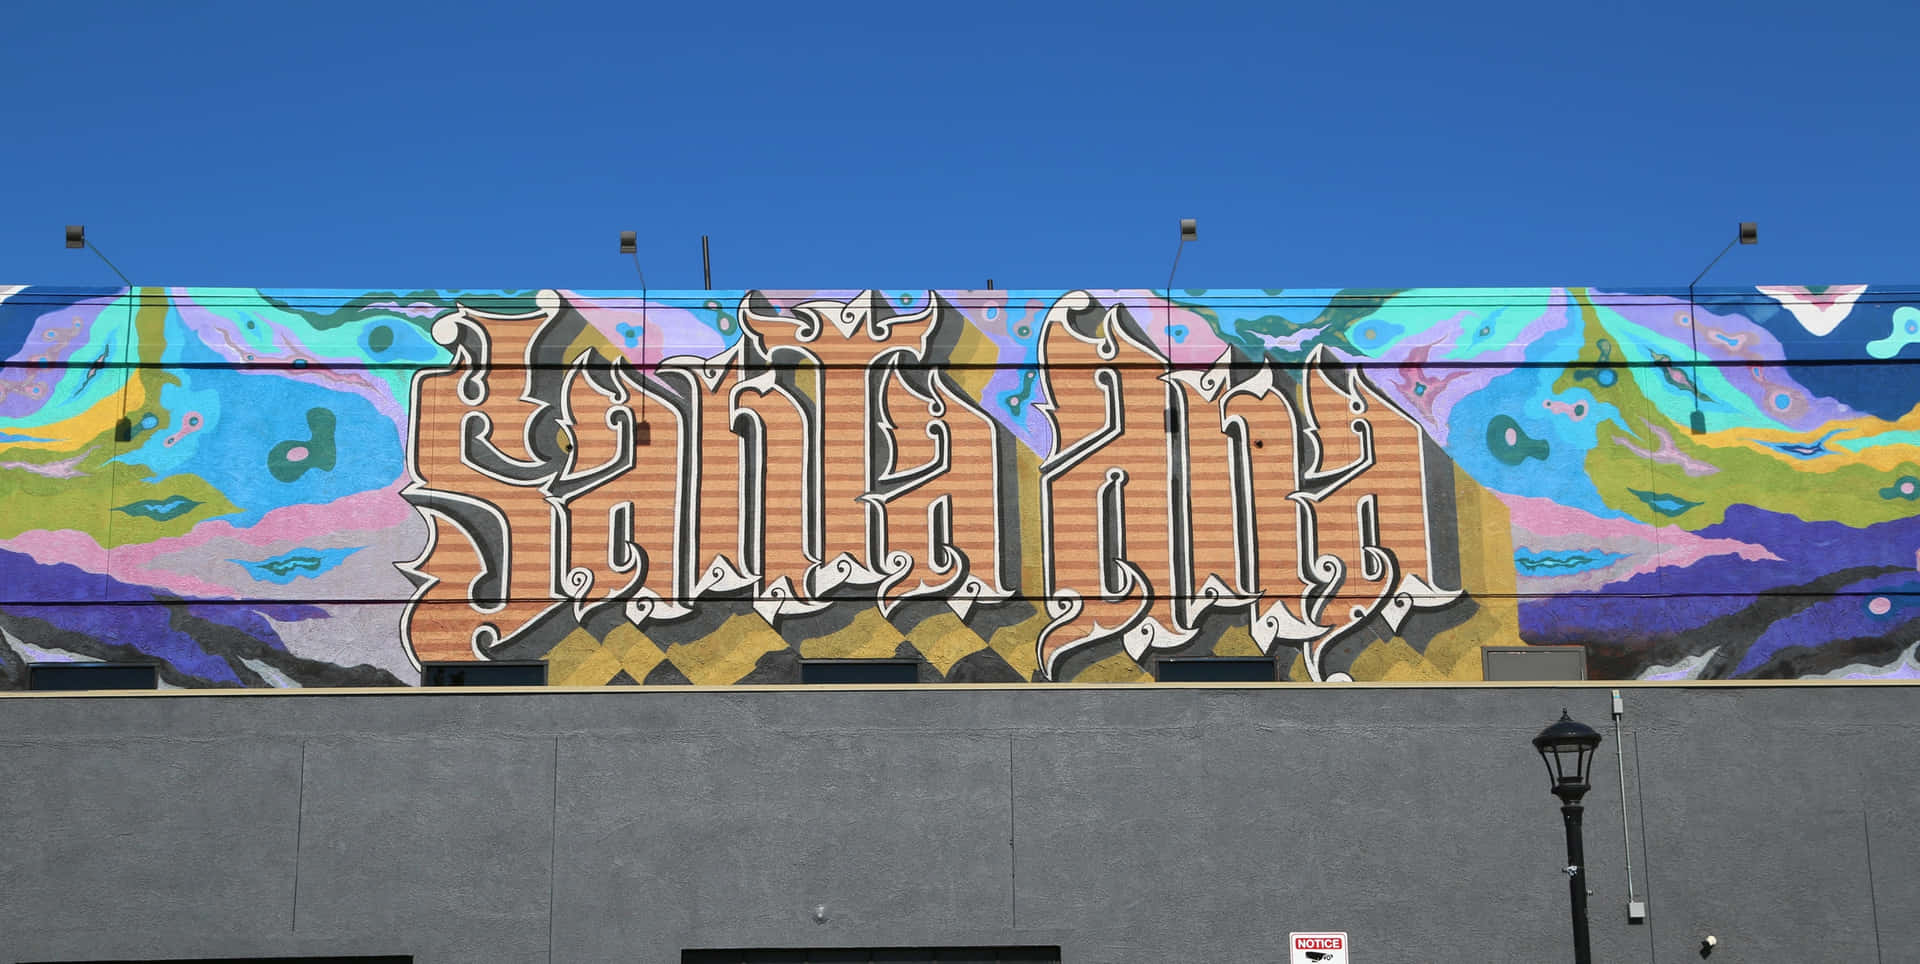 Stunning wall art showcasing the beauty of Santa Ana Wallpaper